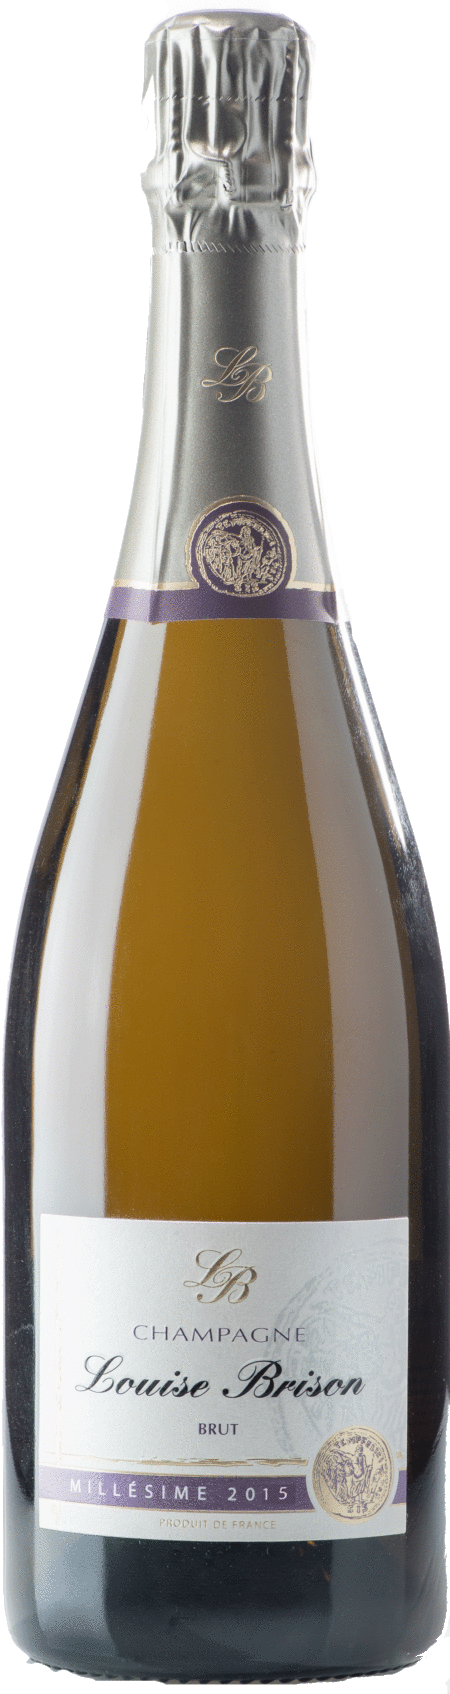 Champagne Millésime 2015